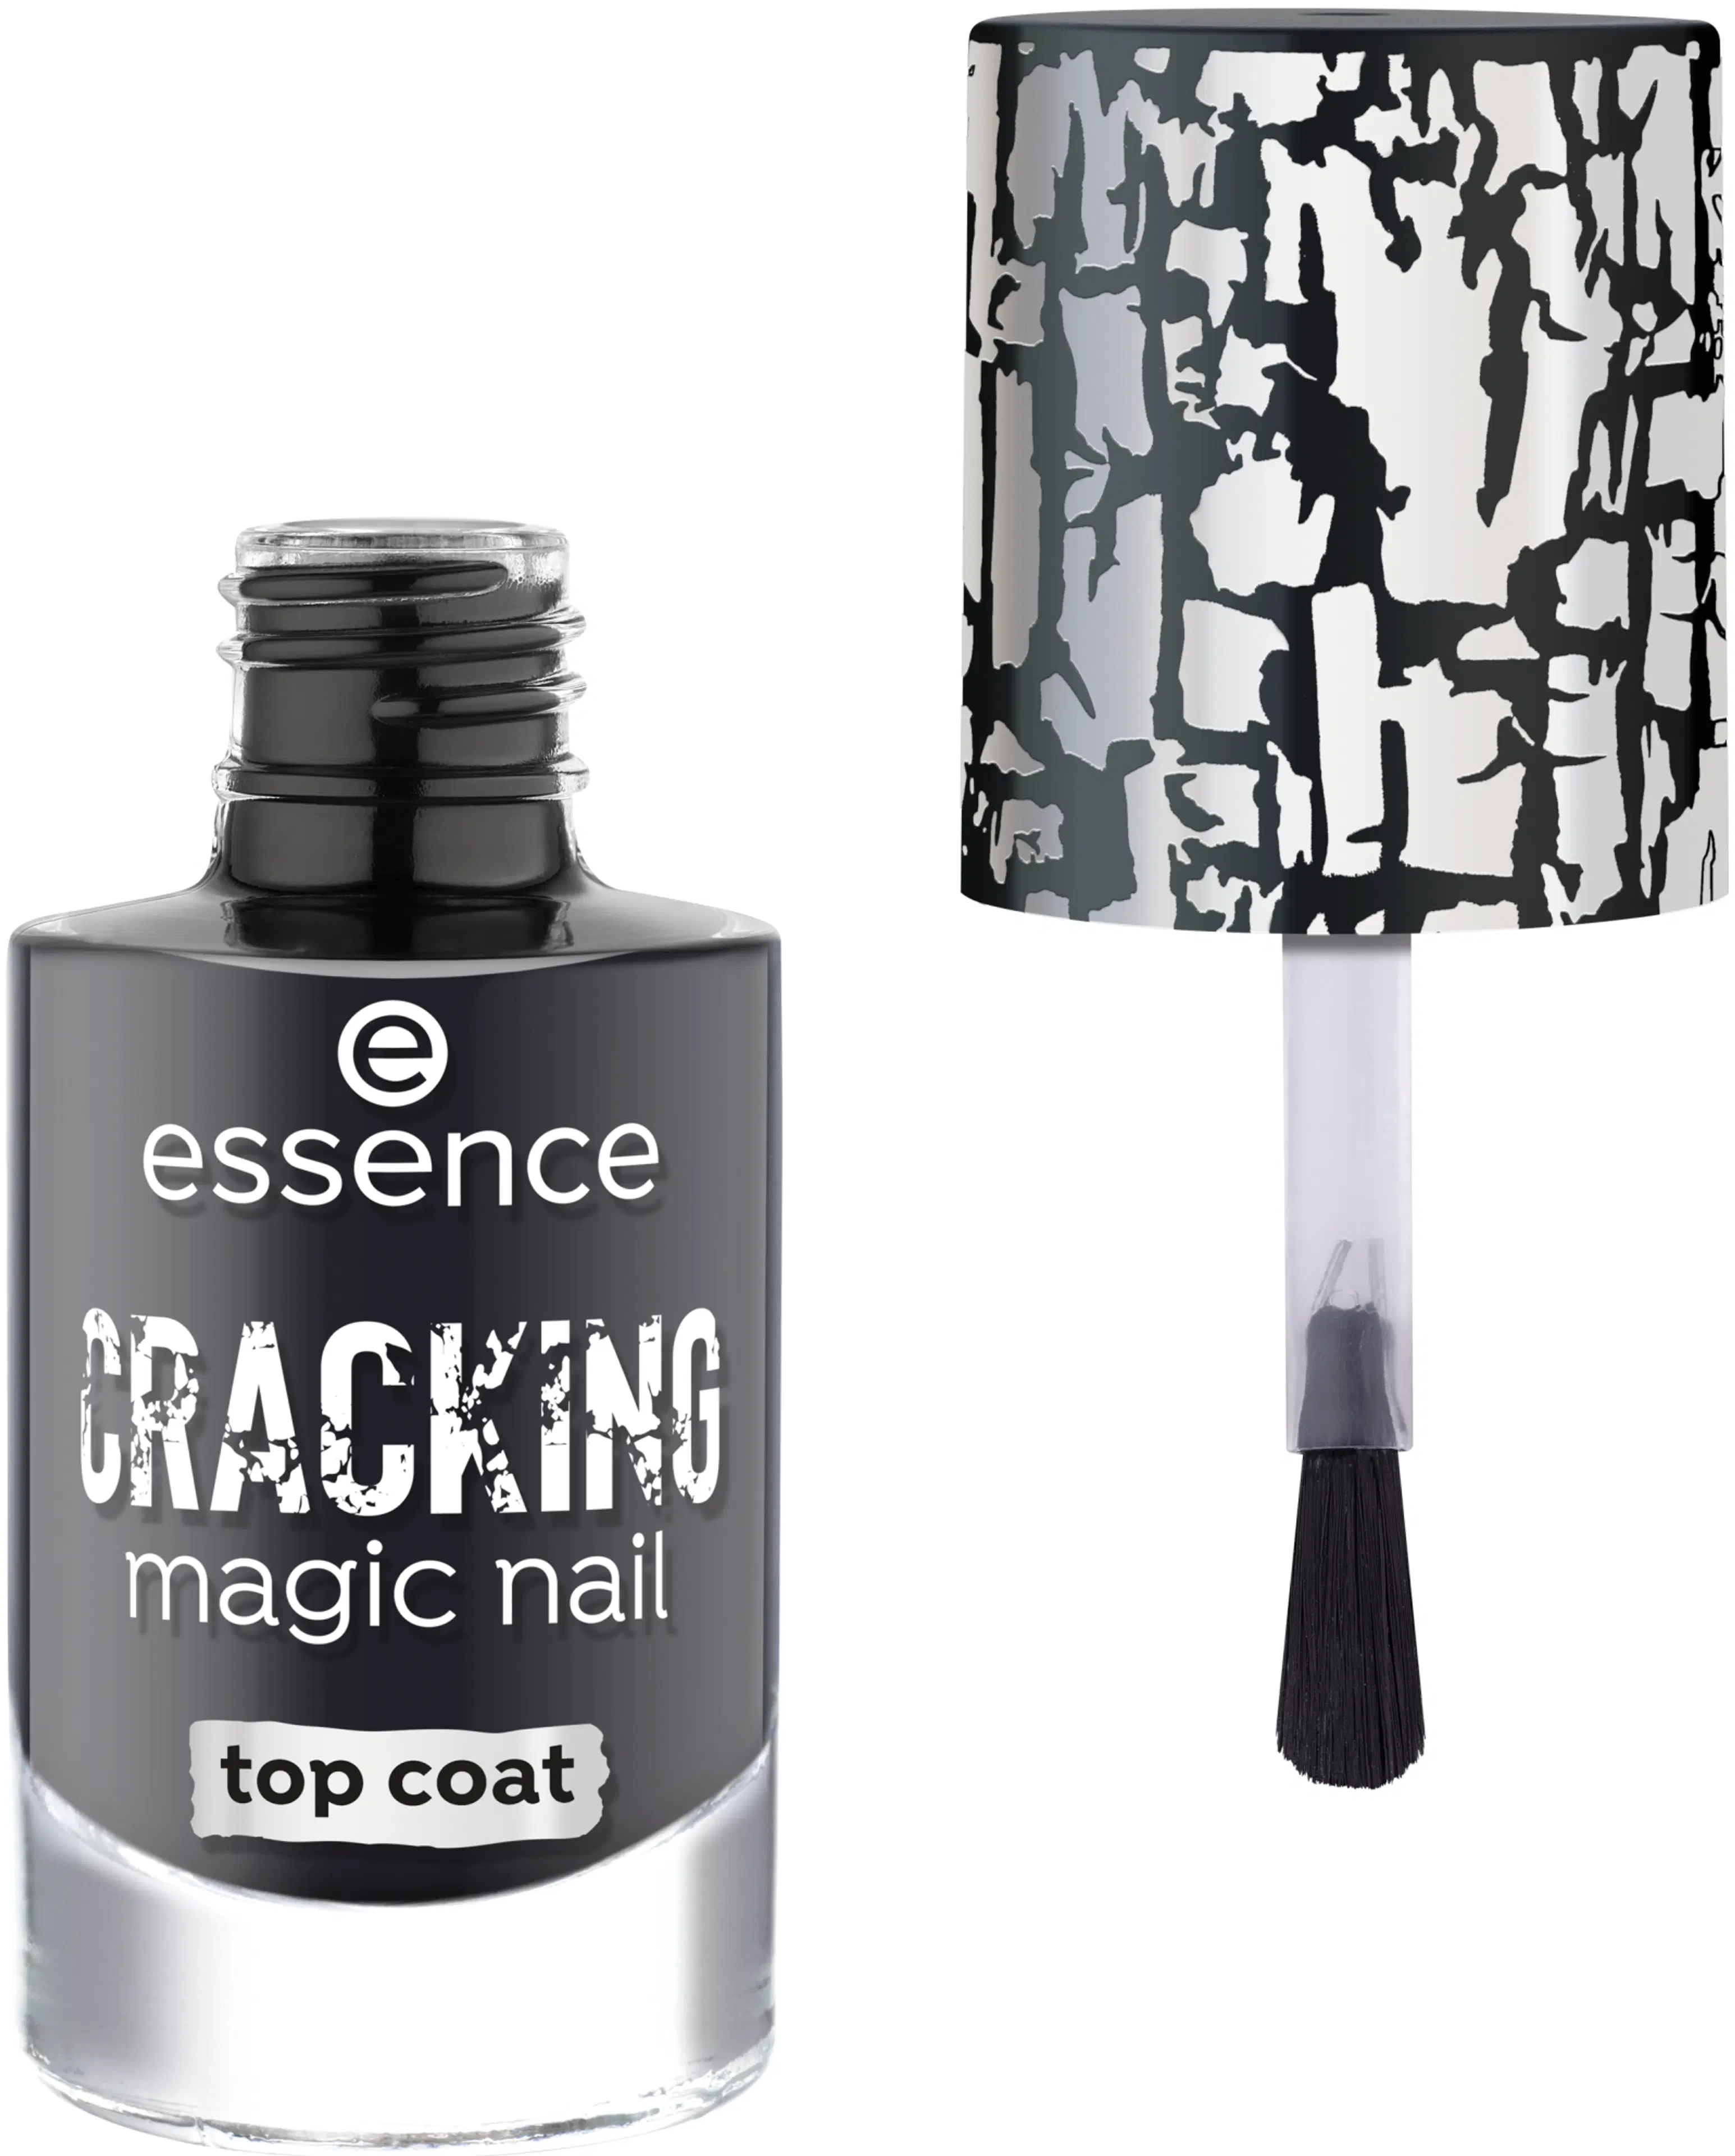 essence CRACKING magic nail top coat päällyslakka 8 ml